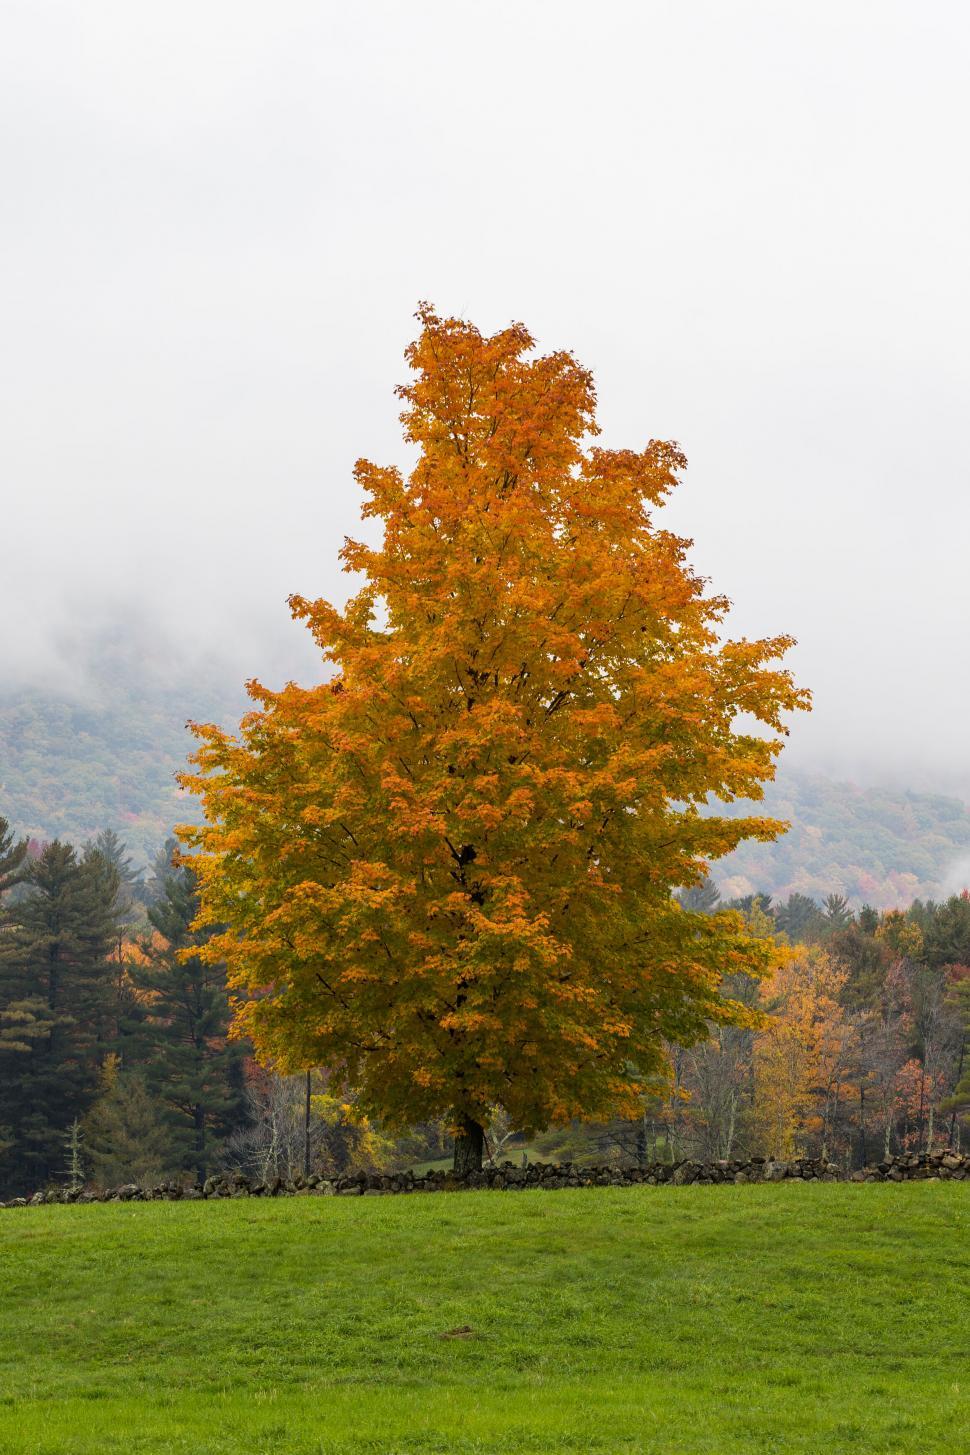 Free Image of Vibrant autumn foliage on a lone tree 